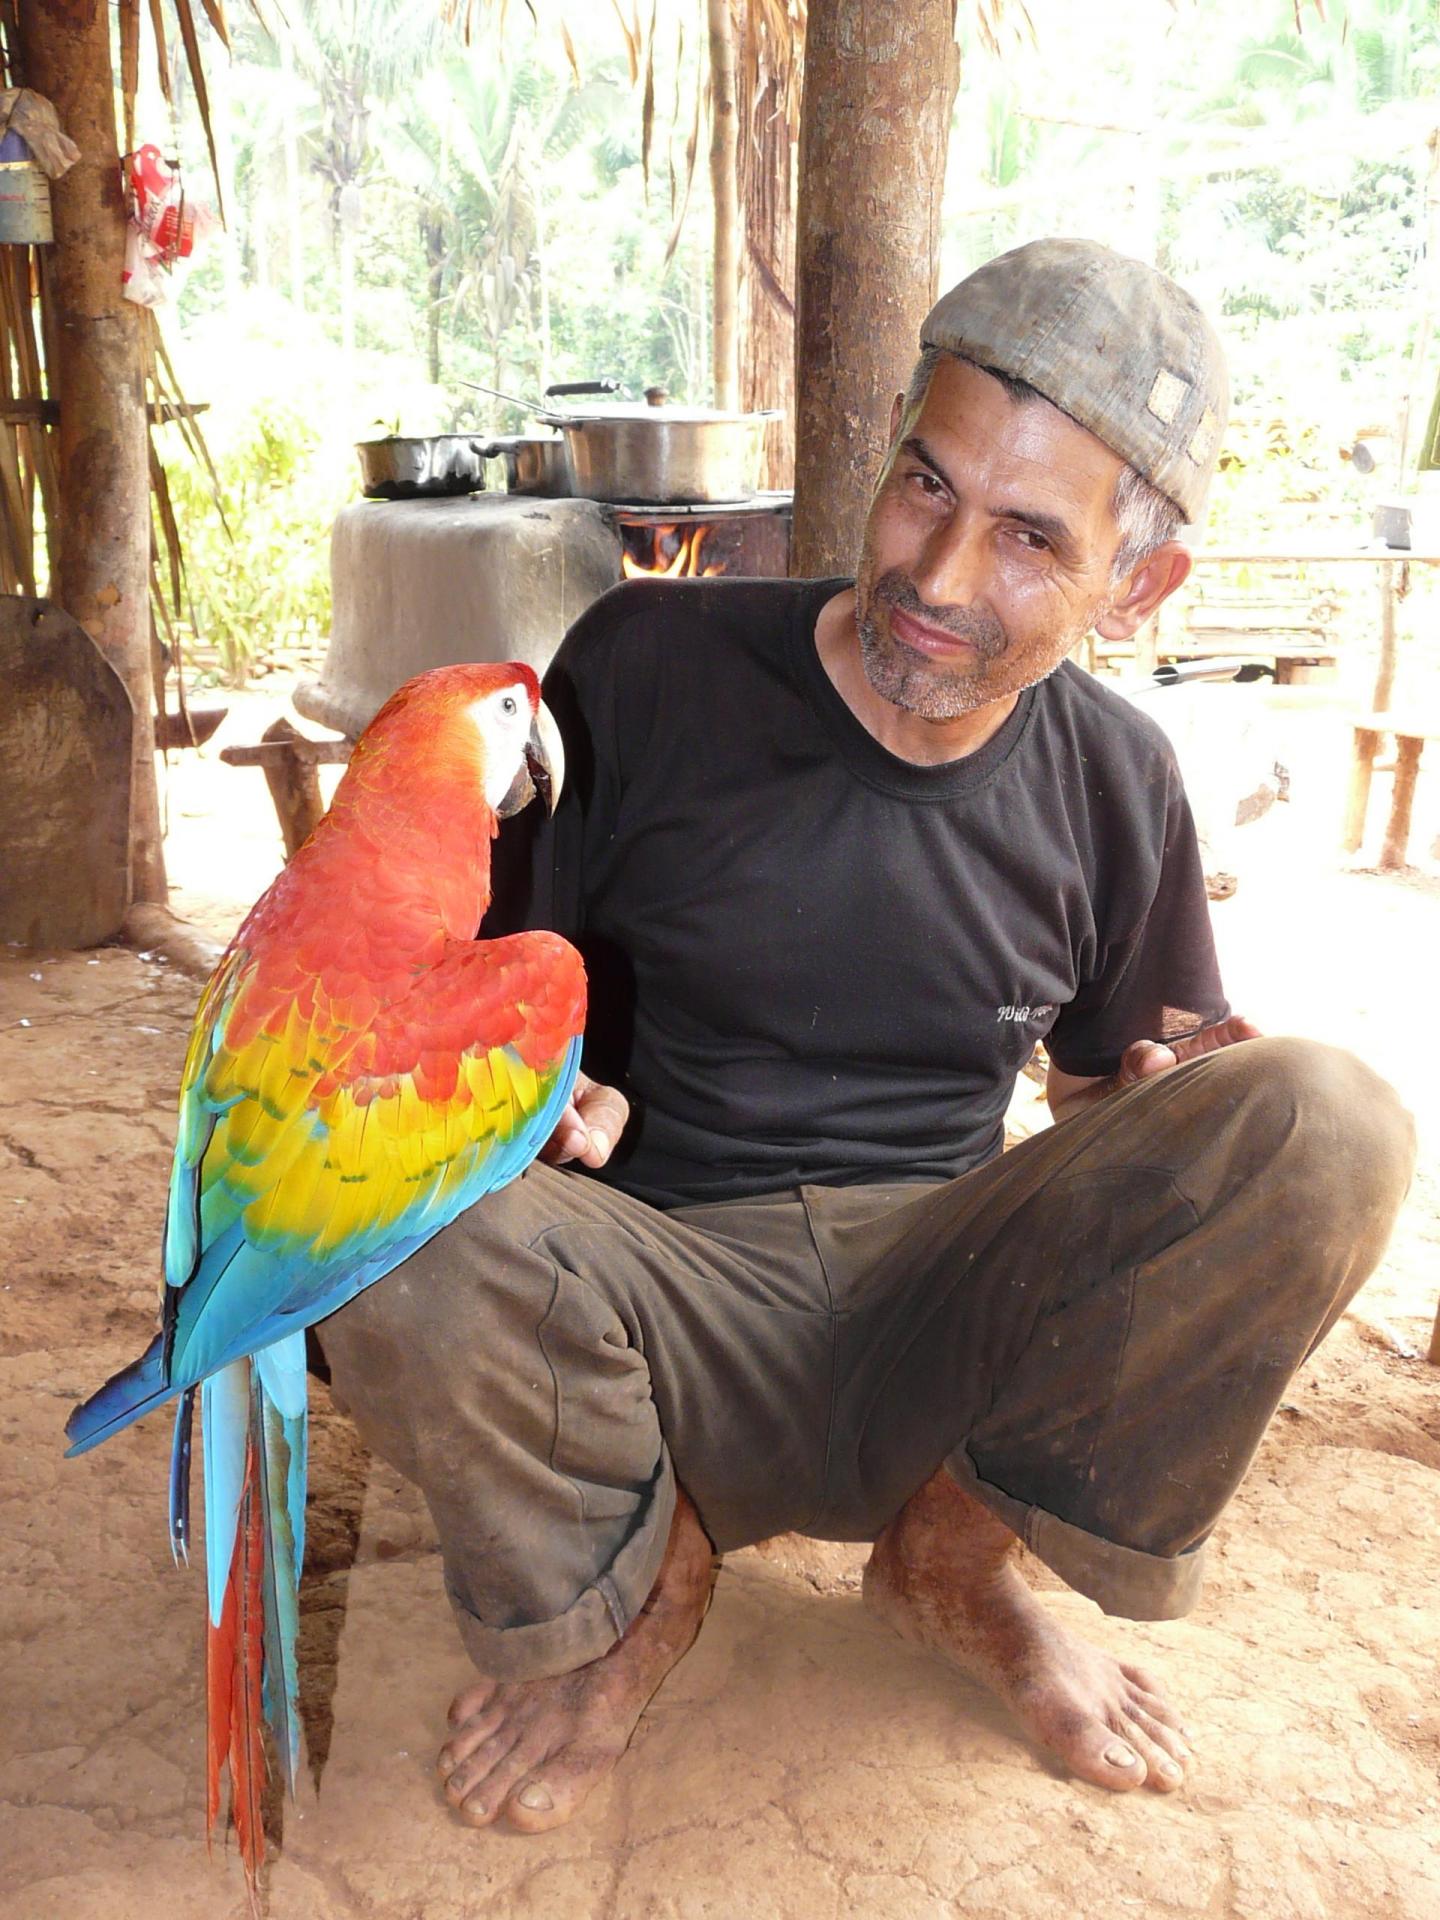 Local Farmer with a Scarlet Macaw